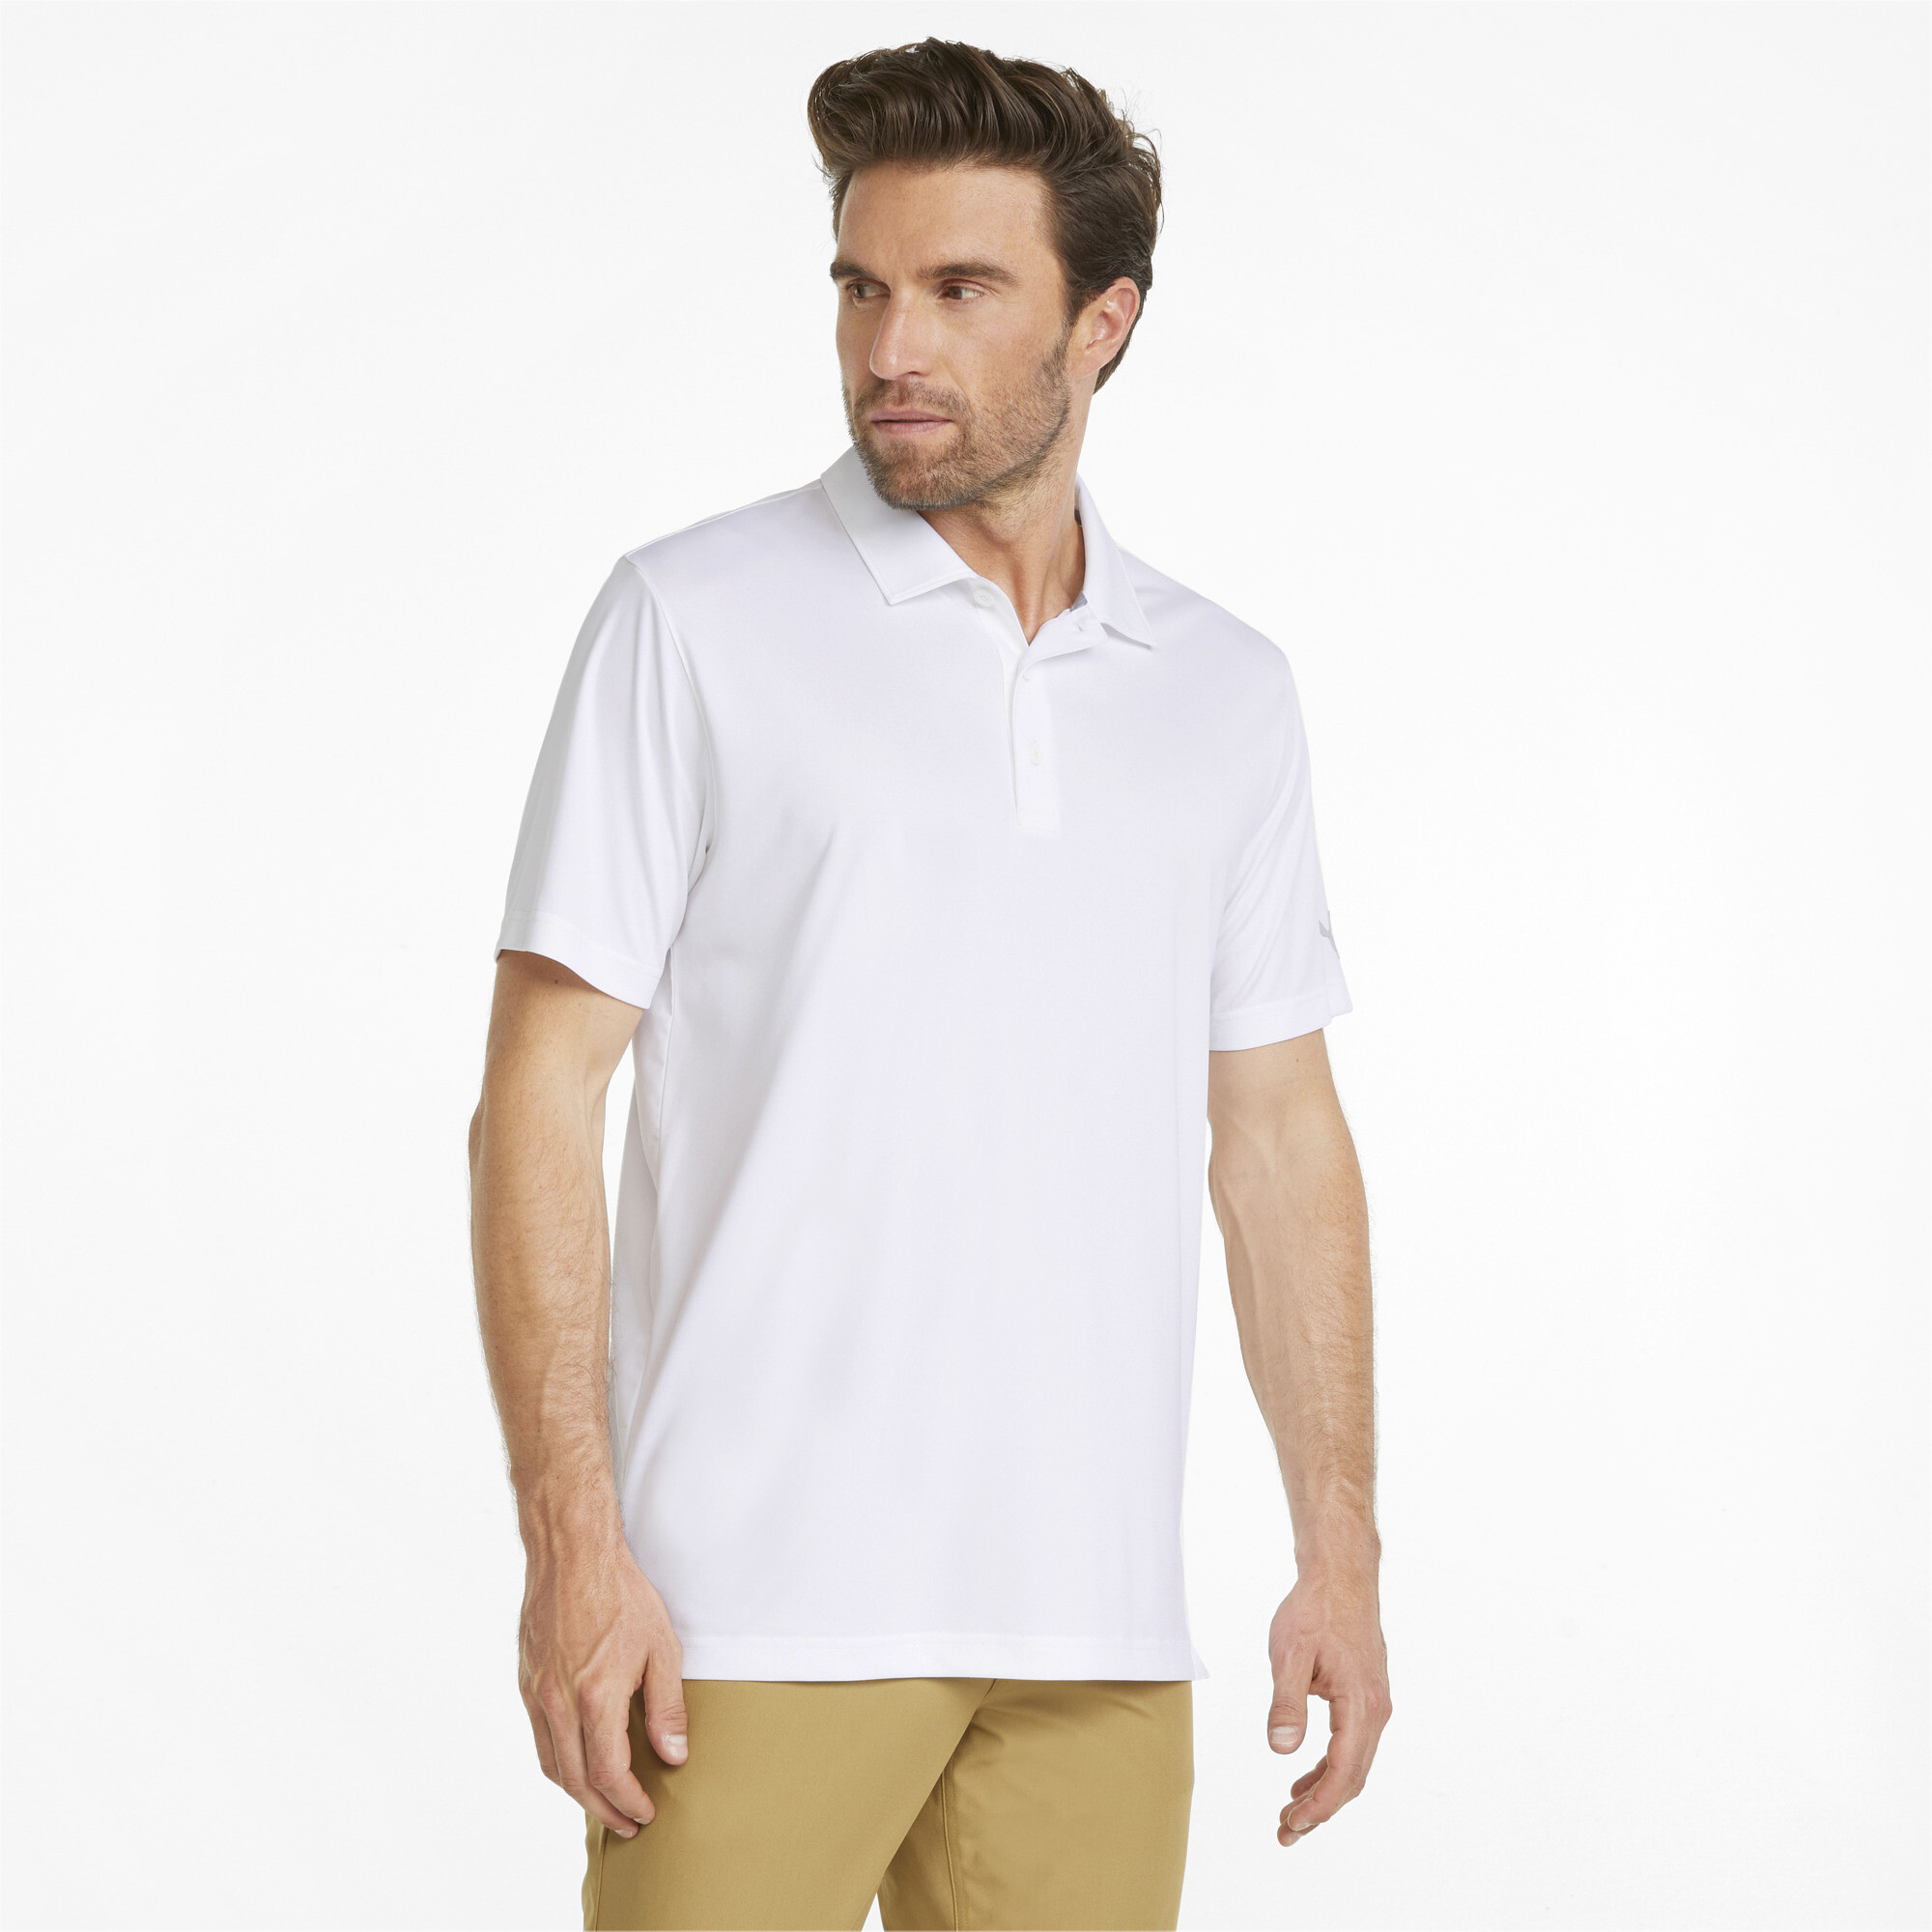 Men's Puma Gamer's Golf Polo Shirt T-Shirt, White T-Shirt, Size XXL T-Shirt, Clothing